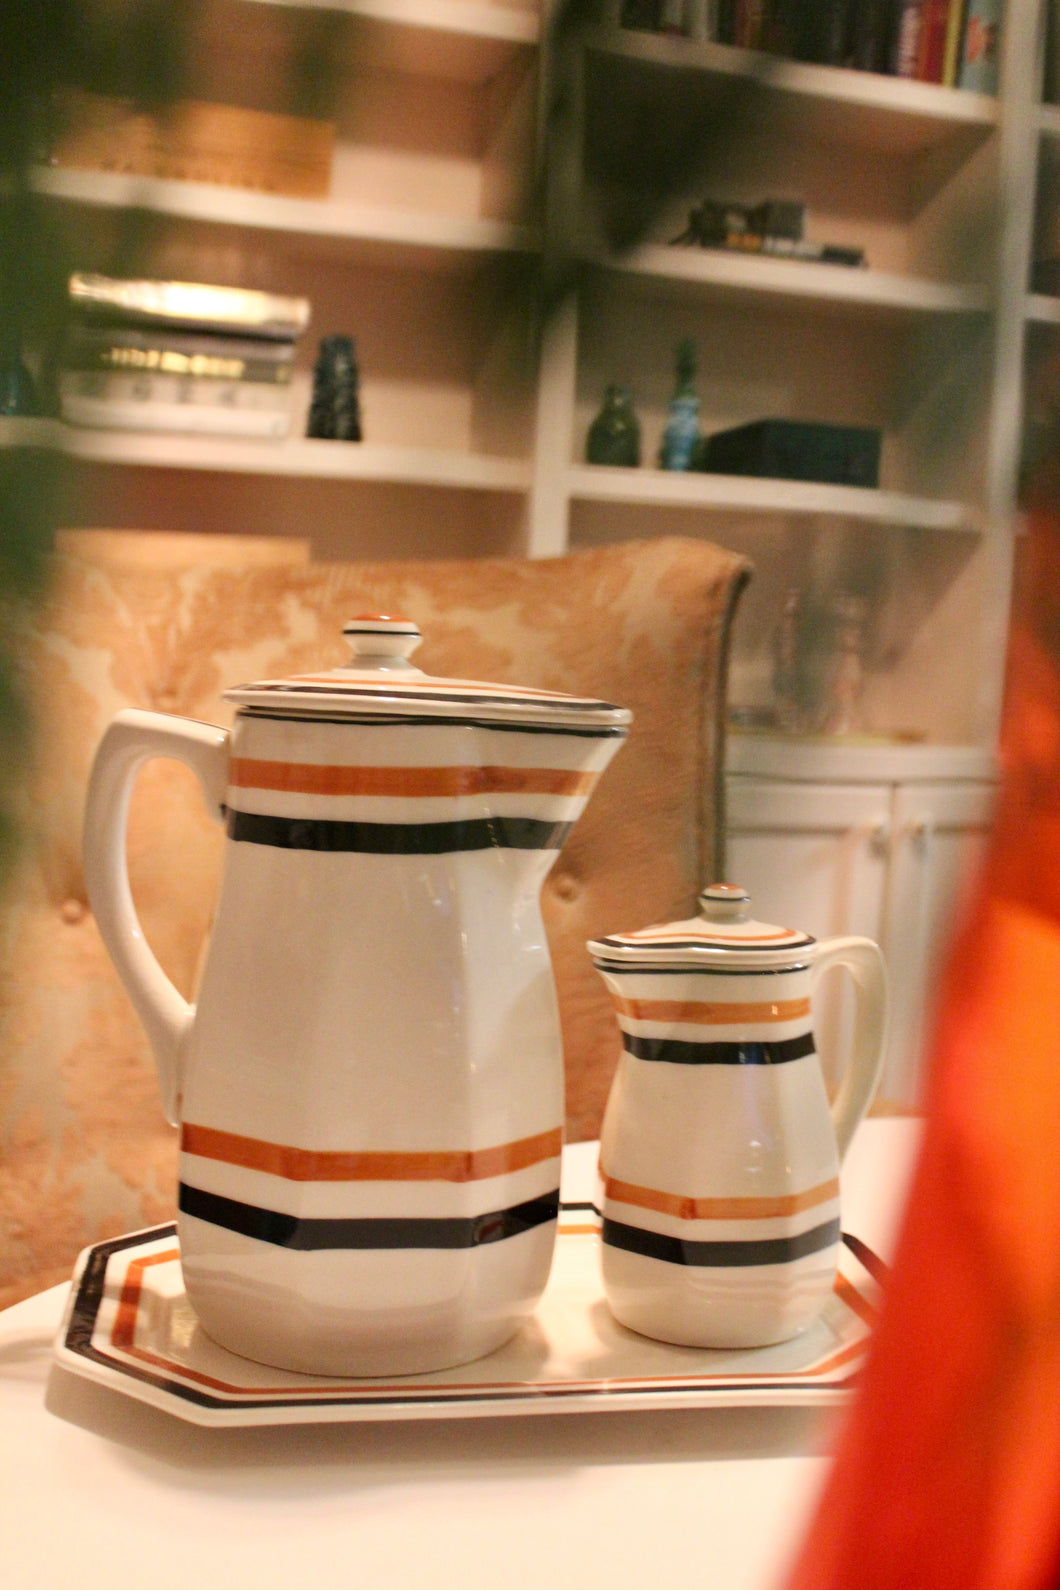 Vintage Moriyama pitcher and creamer set